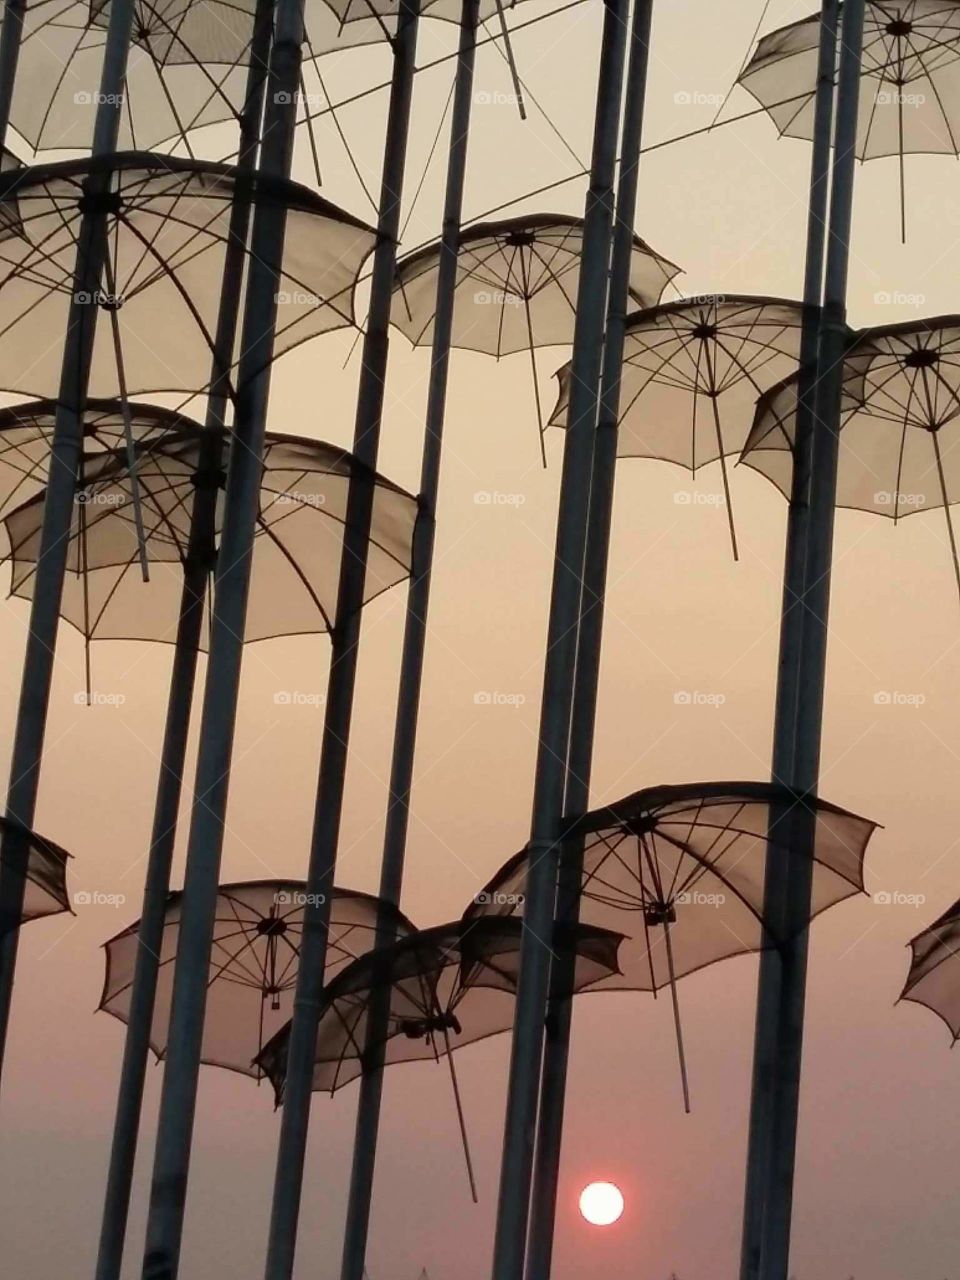 umbrellas against the sun show me the way to calm...!!!!